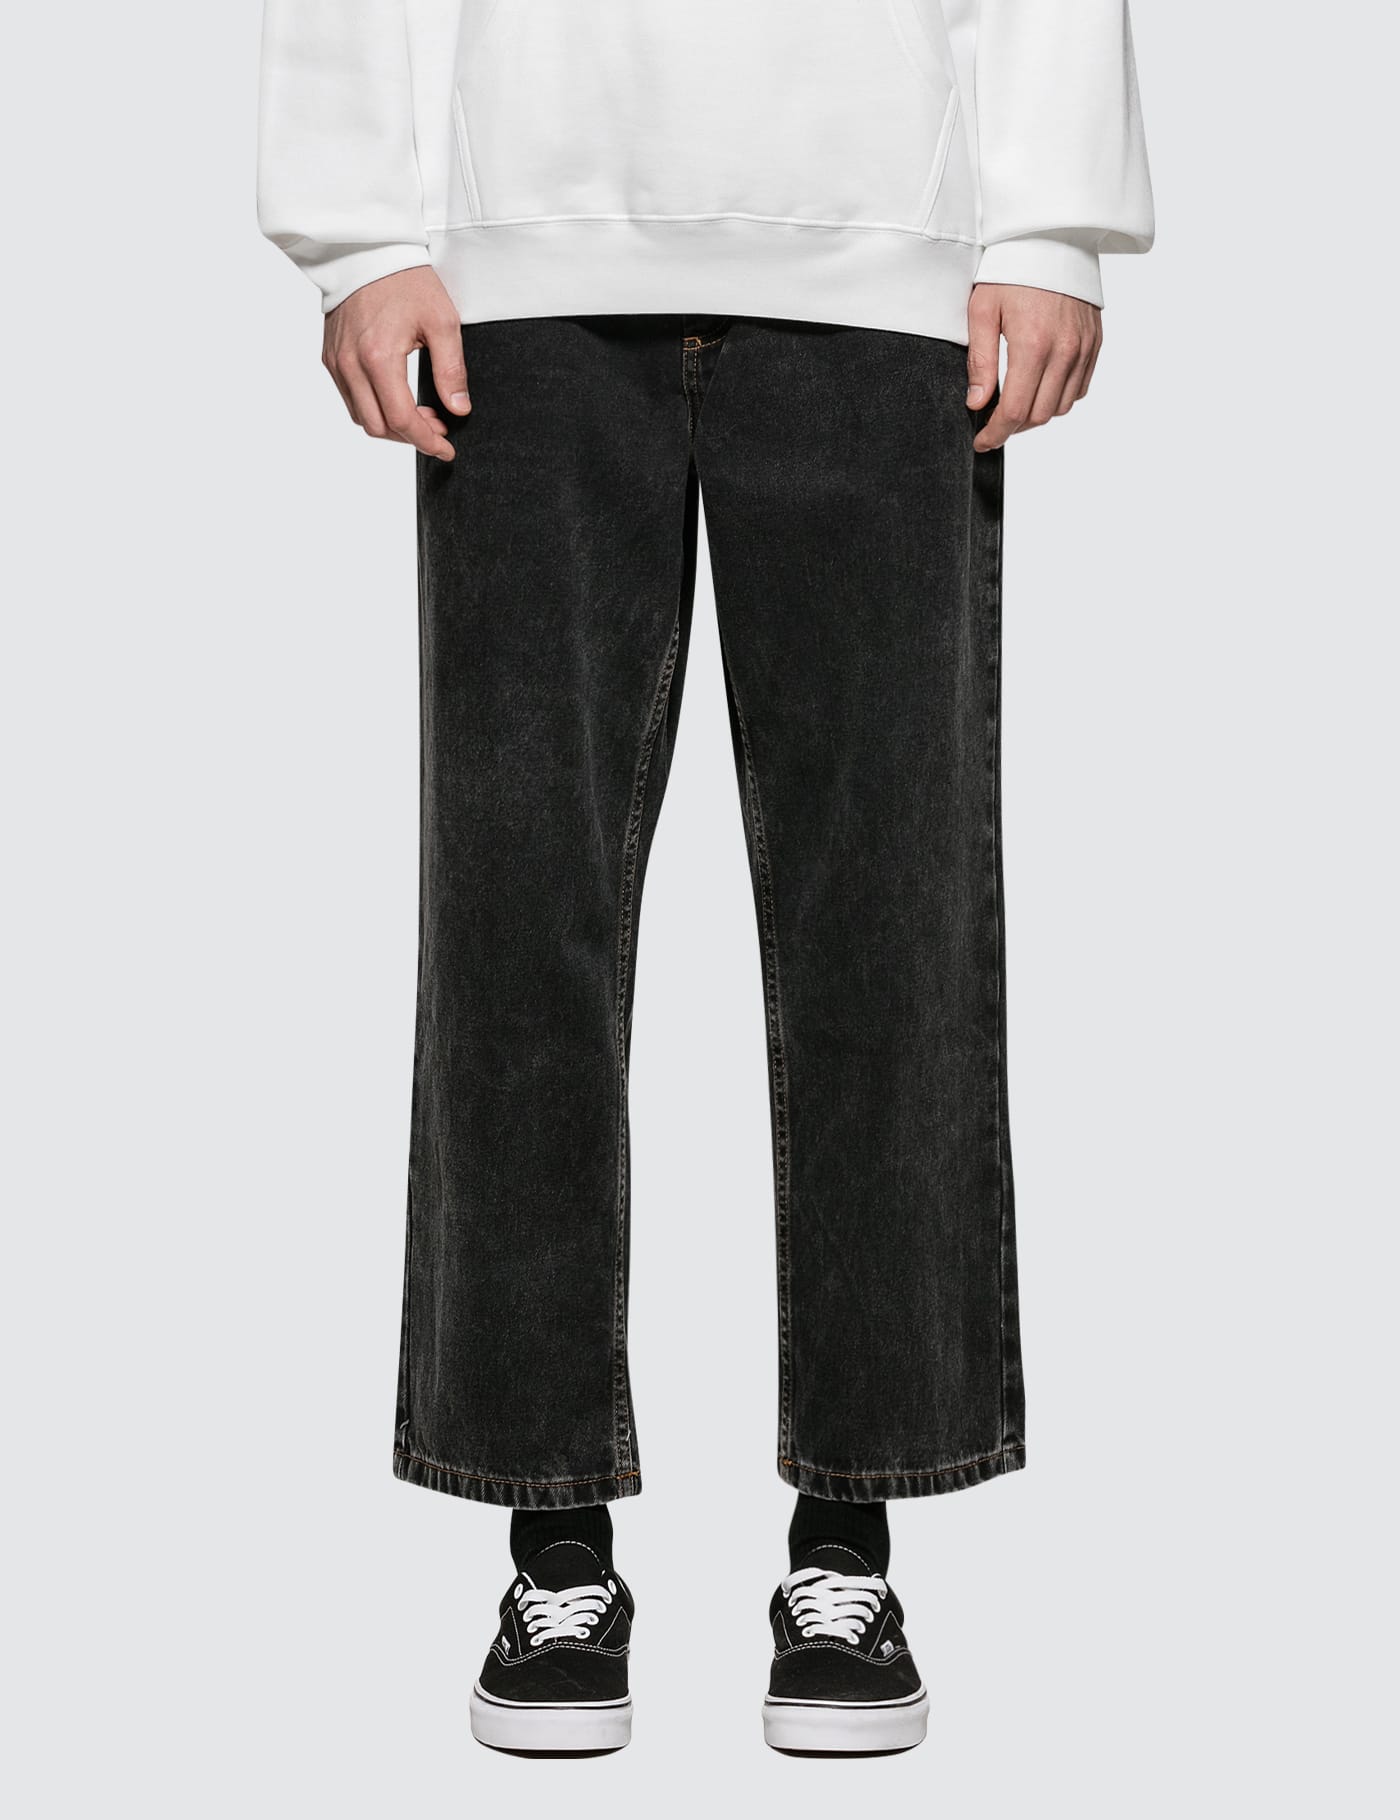 Polar Skate Co. - 93 Denim Jeans | HBX - Globally Curated Fashion 